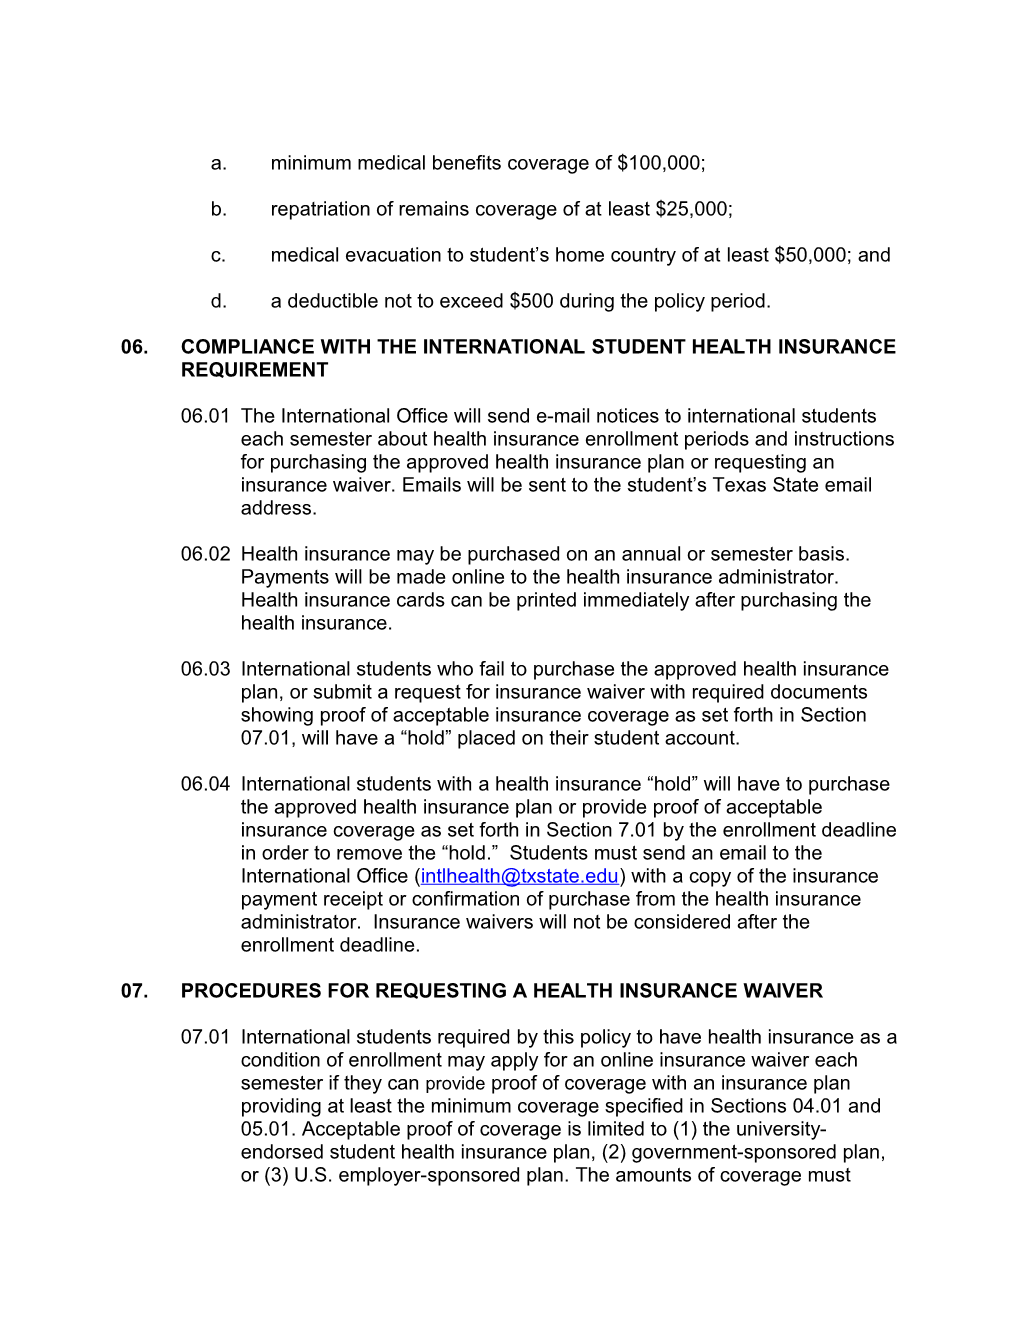 UPPS No. 07.09.04, International Student Health Insurance